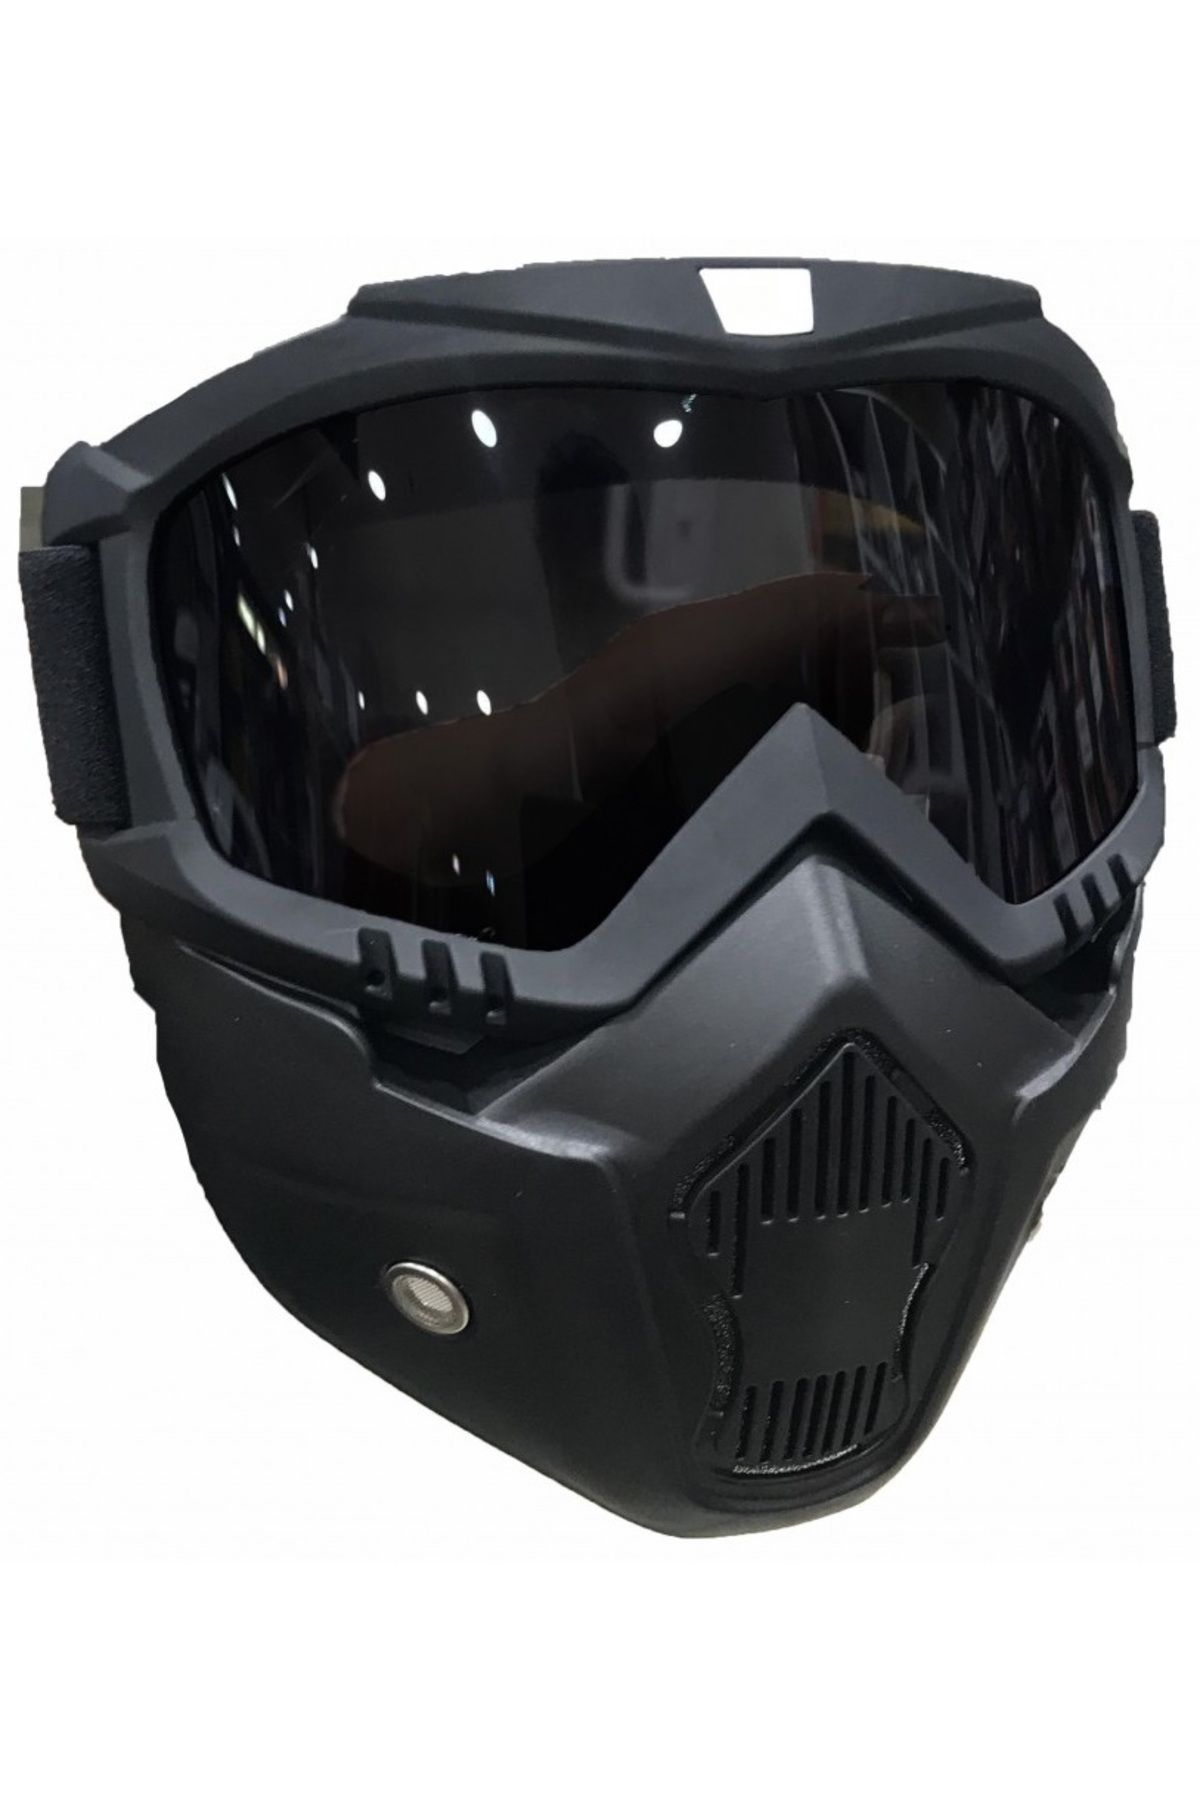 AnkaShop Cross Motosiklet Bisiklet Gözlüğü Açık Kask Maskesi Süngerli Bant Lastikli Jet Maske Siyah Cam